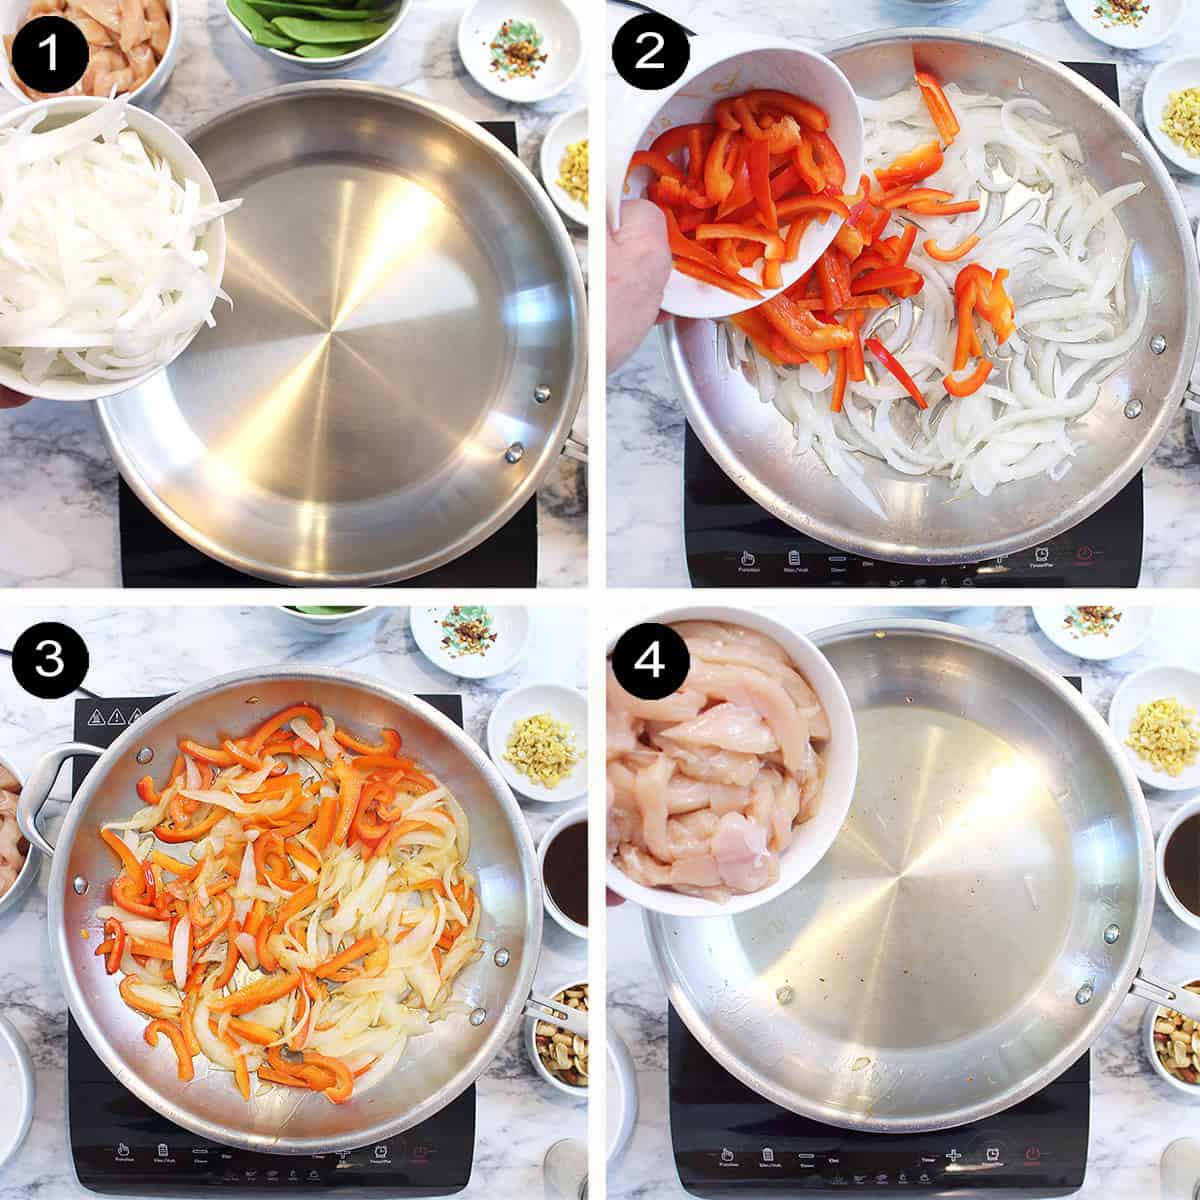 Steps 1-4 to make chicken stir fry.